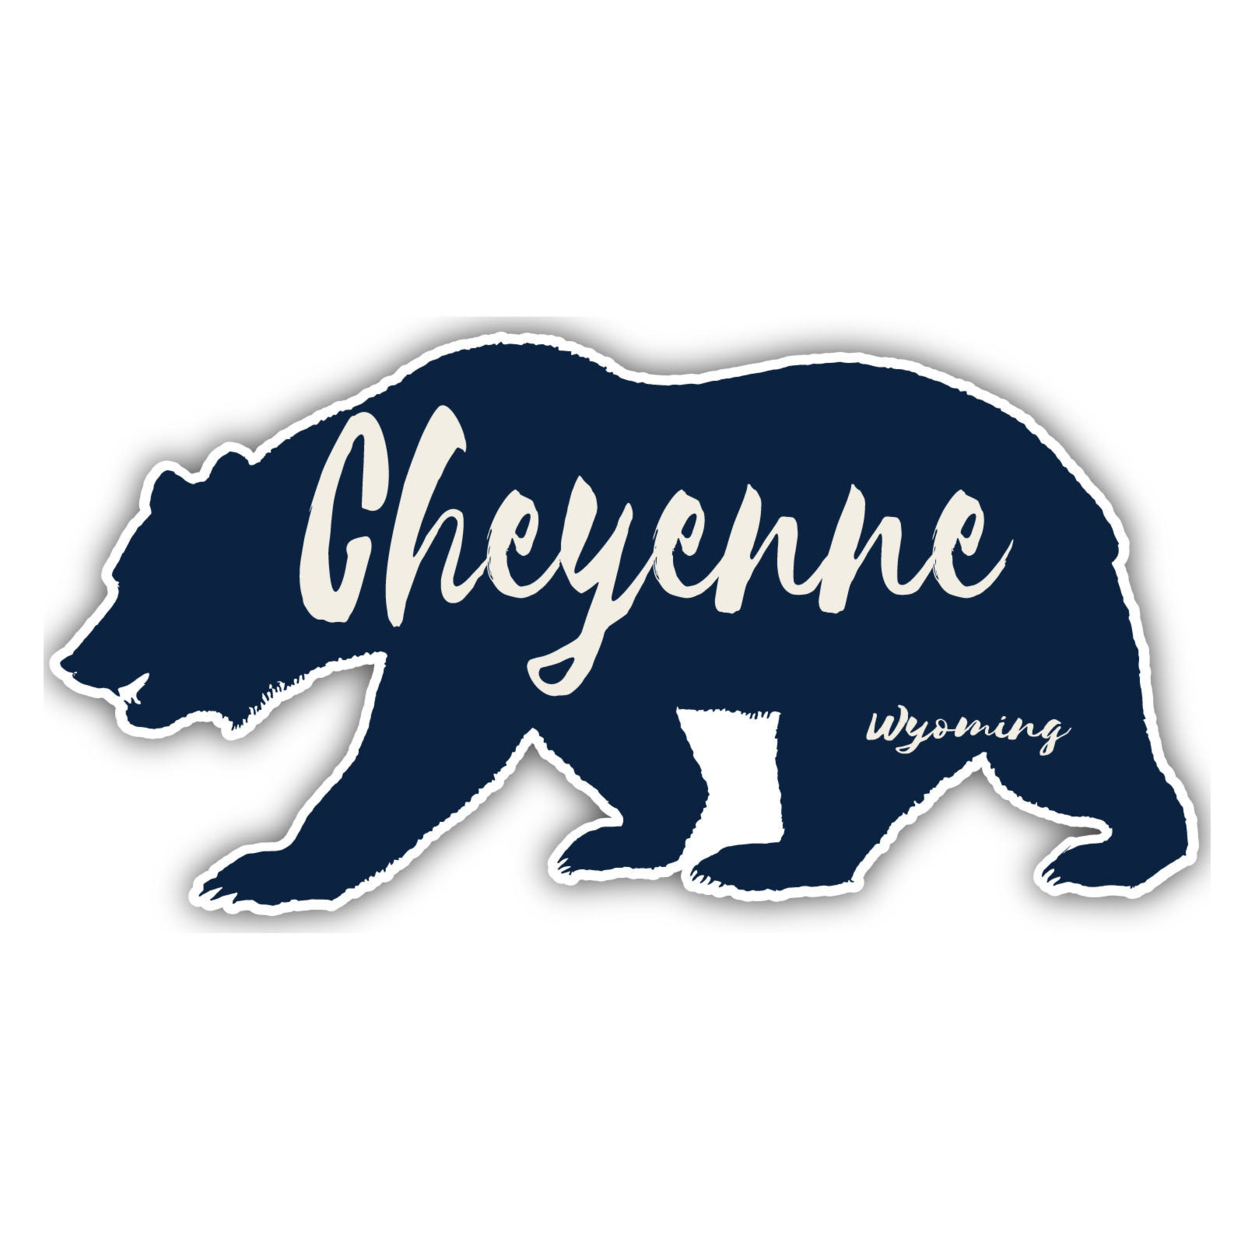 Cheyenne Wyoming Souvenir Decorative Stickers (Choose Theme And Size) - Single Unit, 12-Inch, Bear